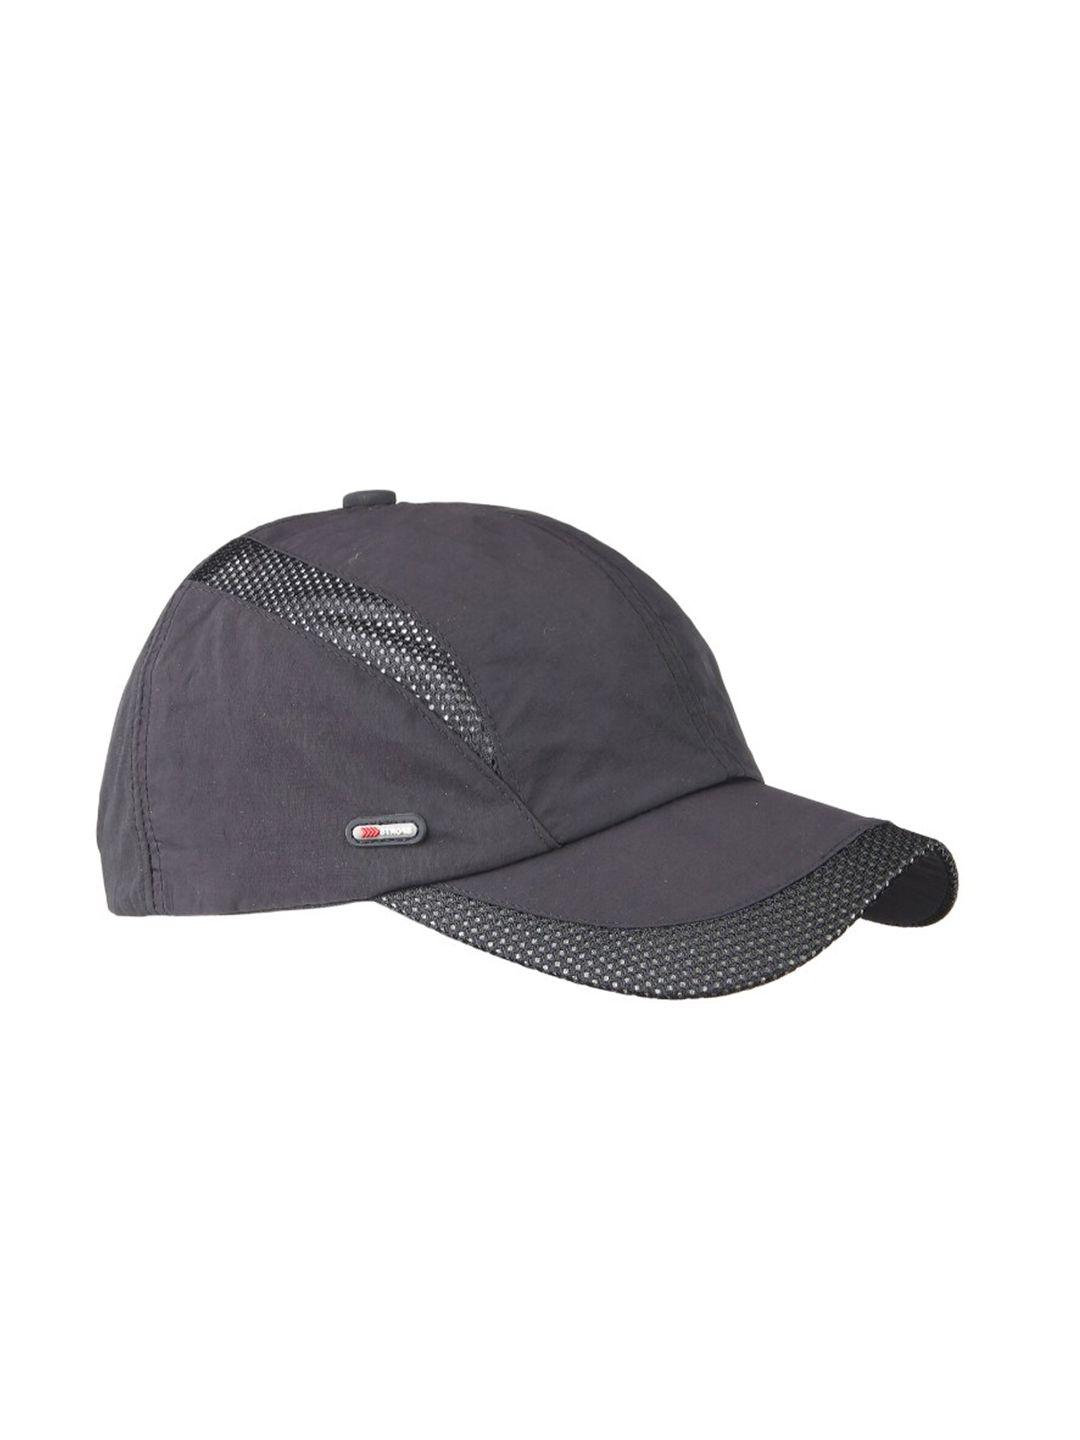 isweven unisex black snapback cap